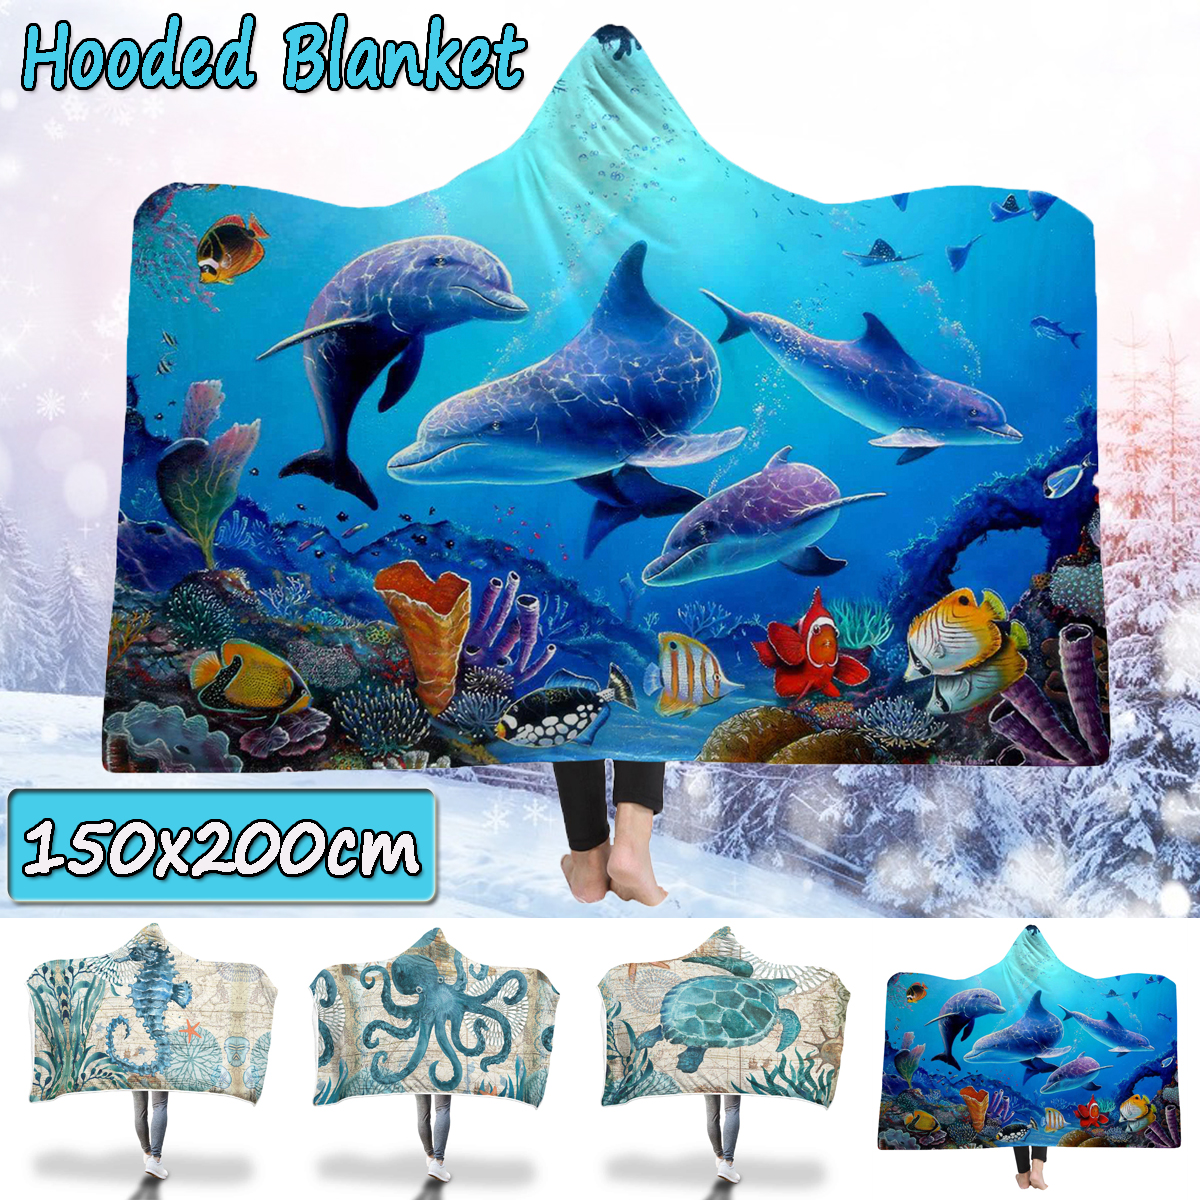 150x200cm-Kid-Adult-Hooded-Blankets-Soft-Ocean-World-Wearable-Throw-Blankets-Cloak-1424009-1